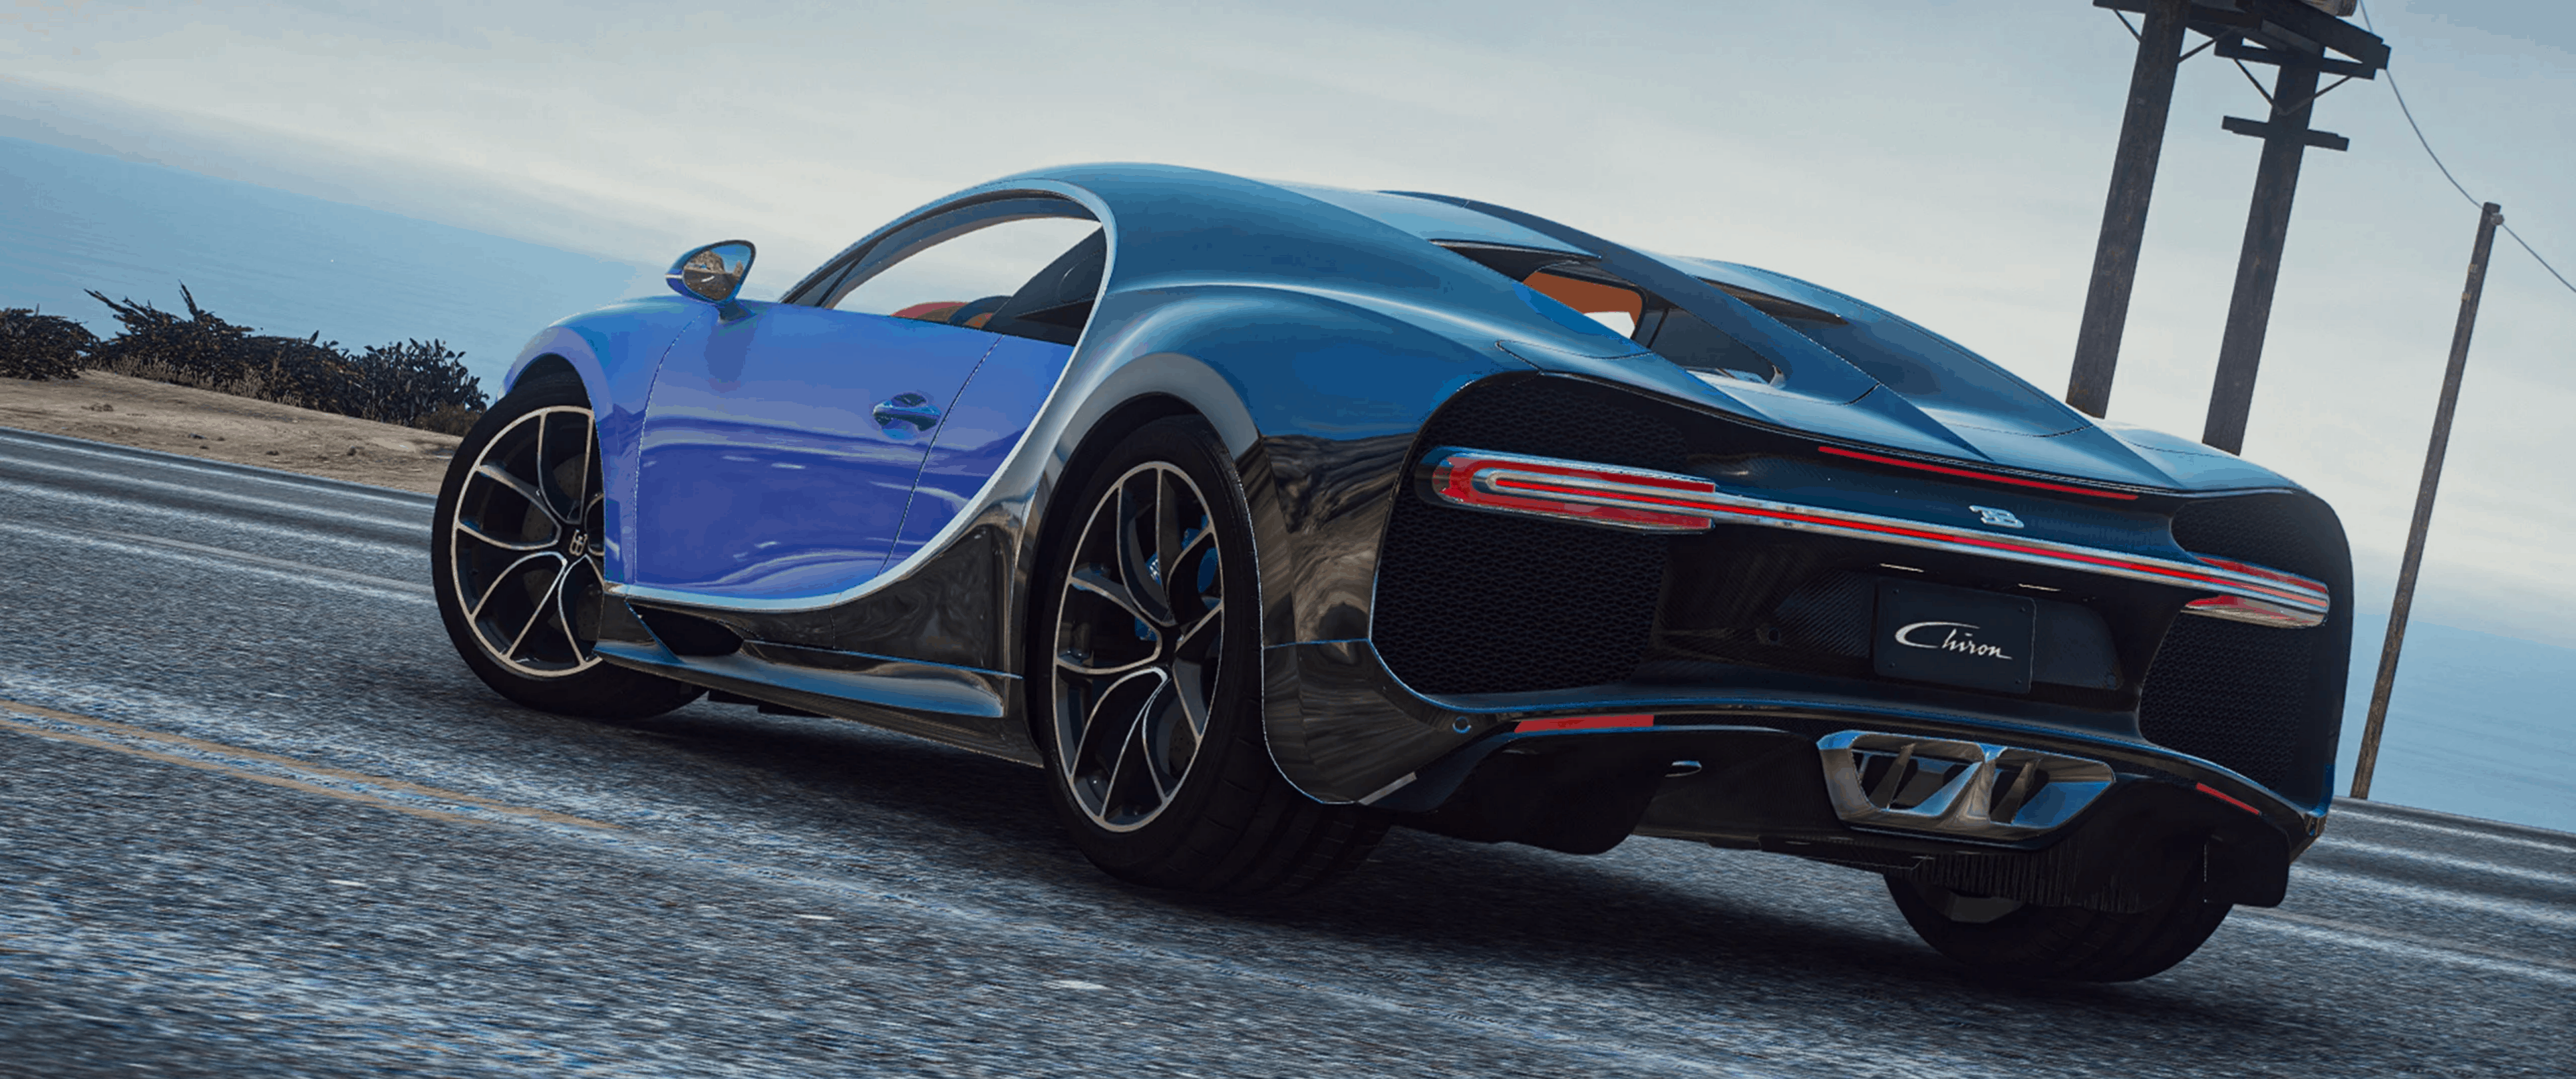 2017 Bugatti Chiron 5.0 - GTA 5 Mod | Grand Theft Auto 5 Mod